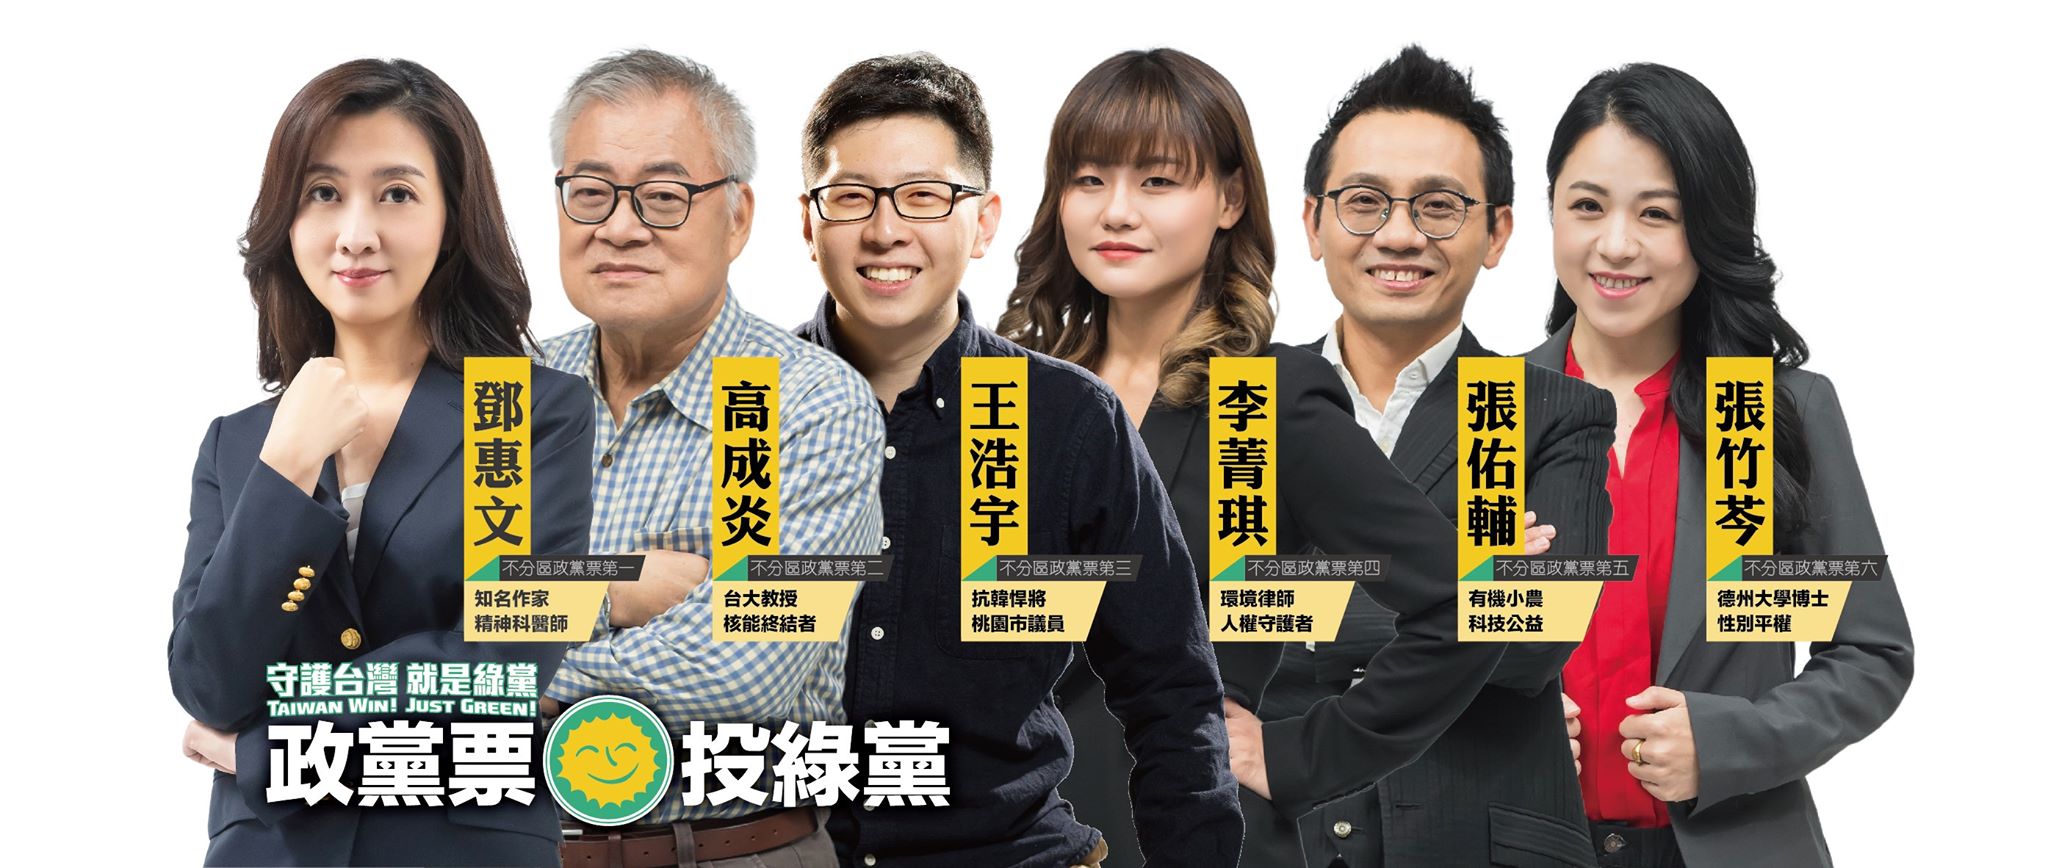 TaiwanGreens2020candidate